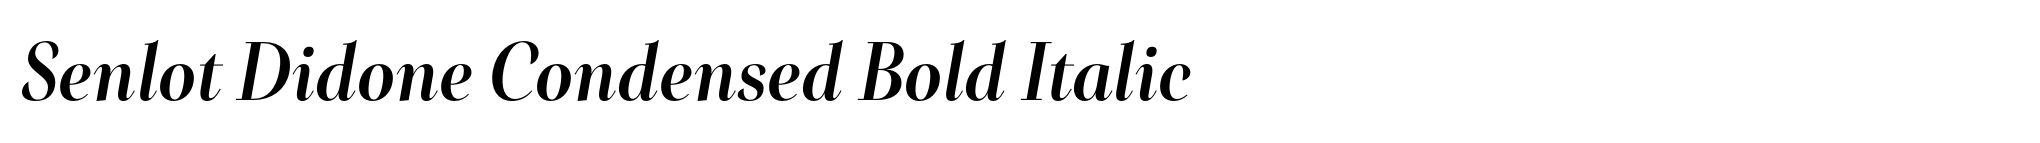 Senlot Didone Condensed Bold Italic image